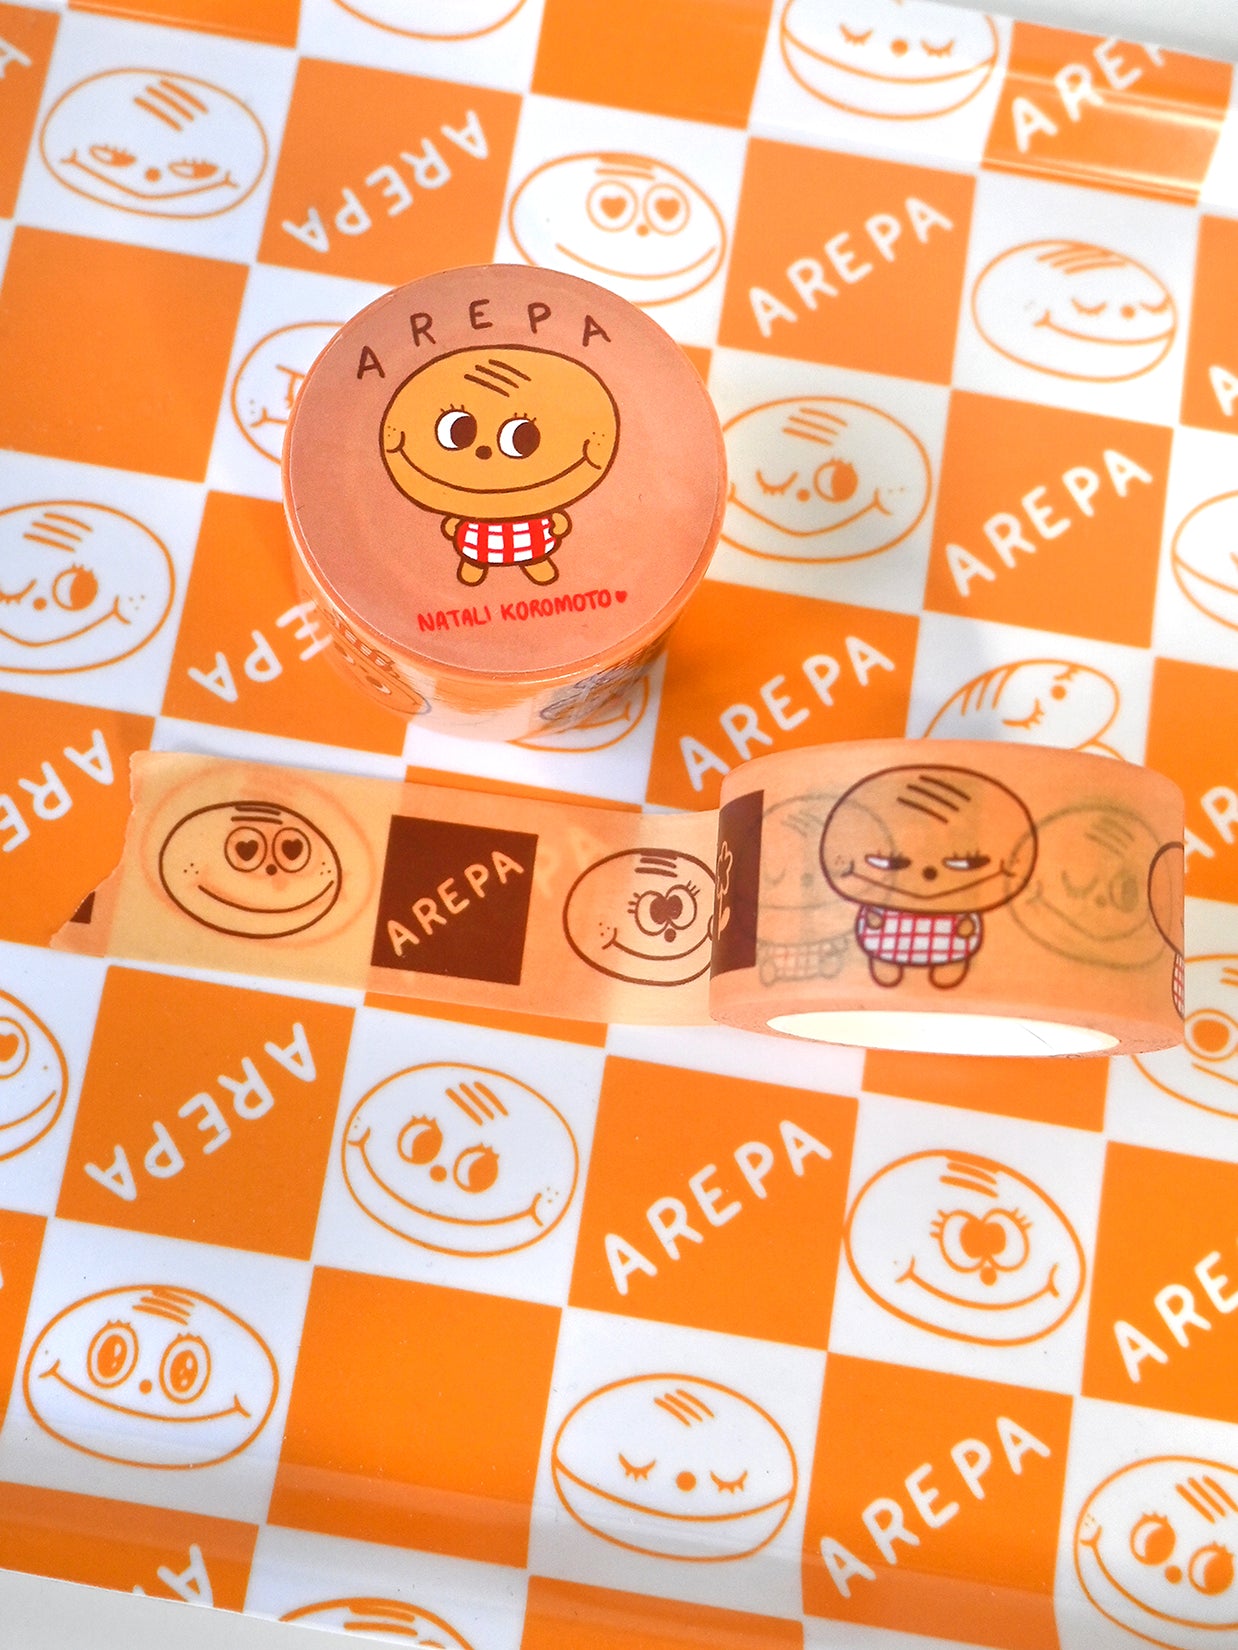 "Arepa" design Washi Tape, by Natali Koromoto.